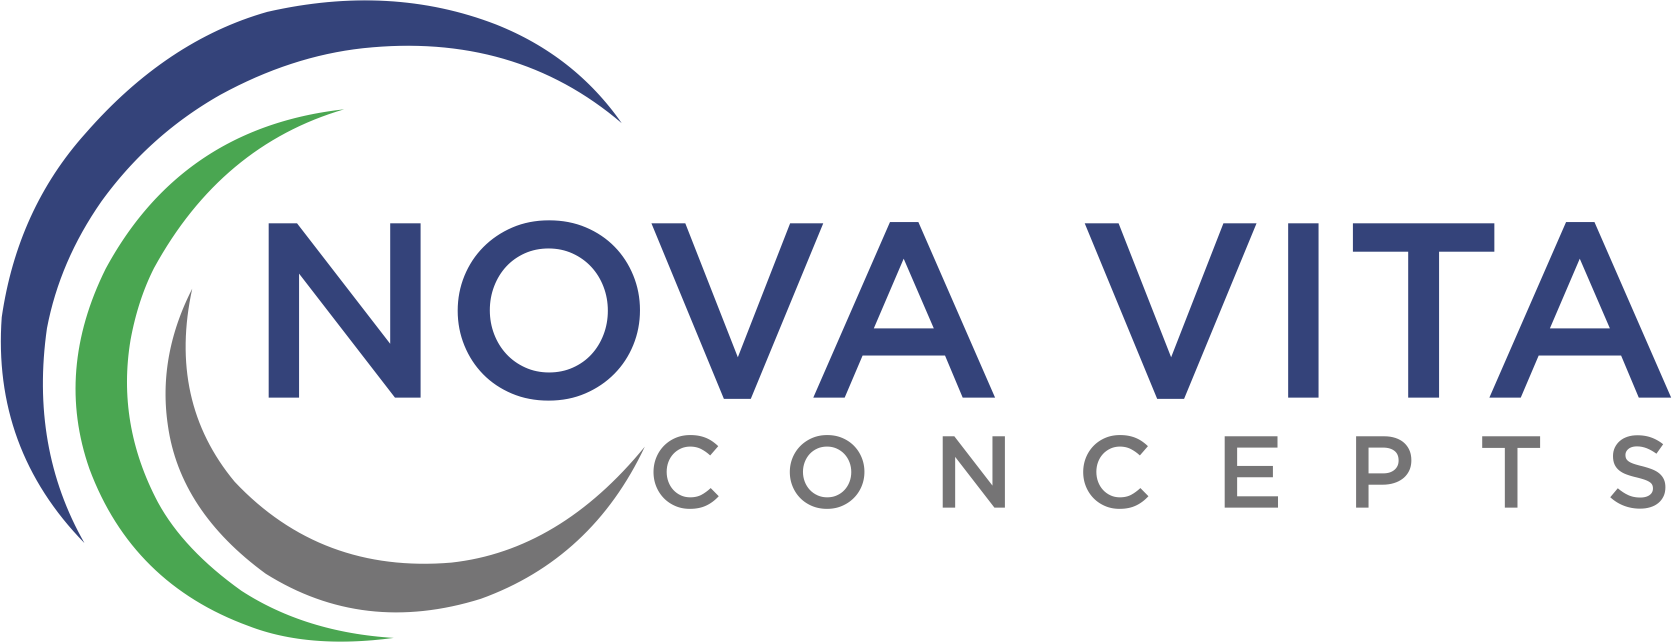 Nova Vita Concepts Firmenlogo